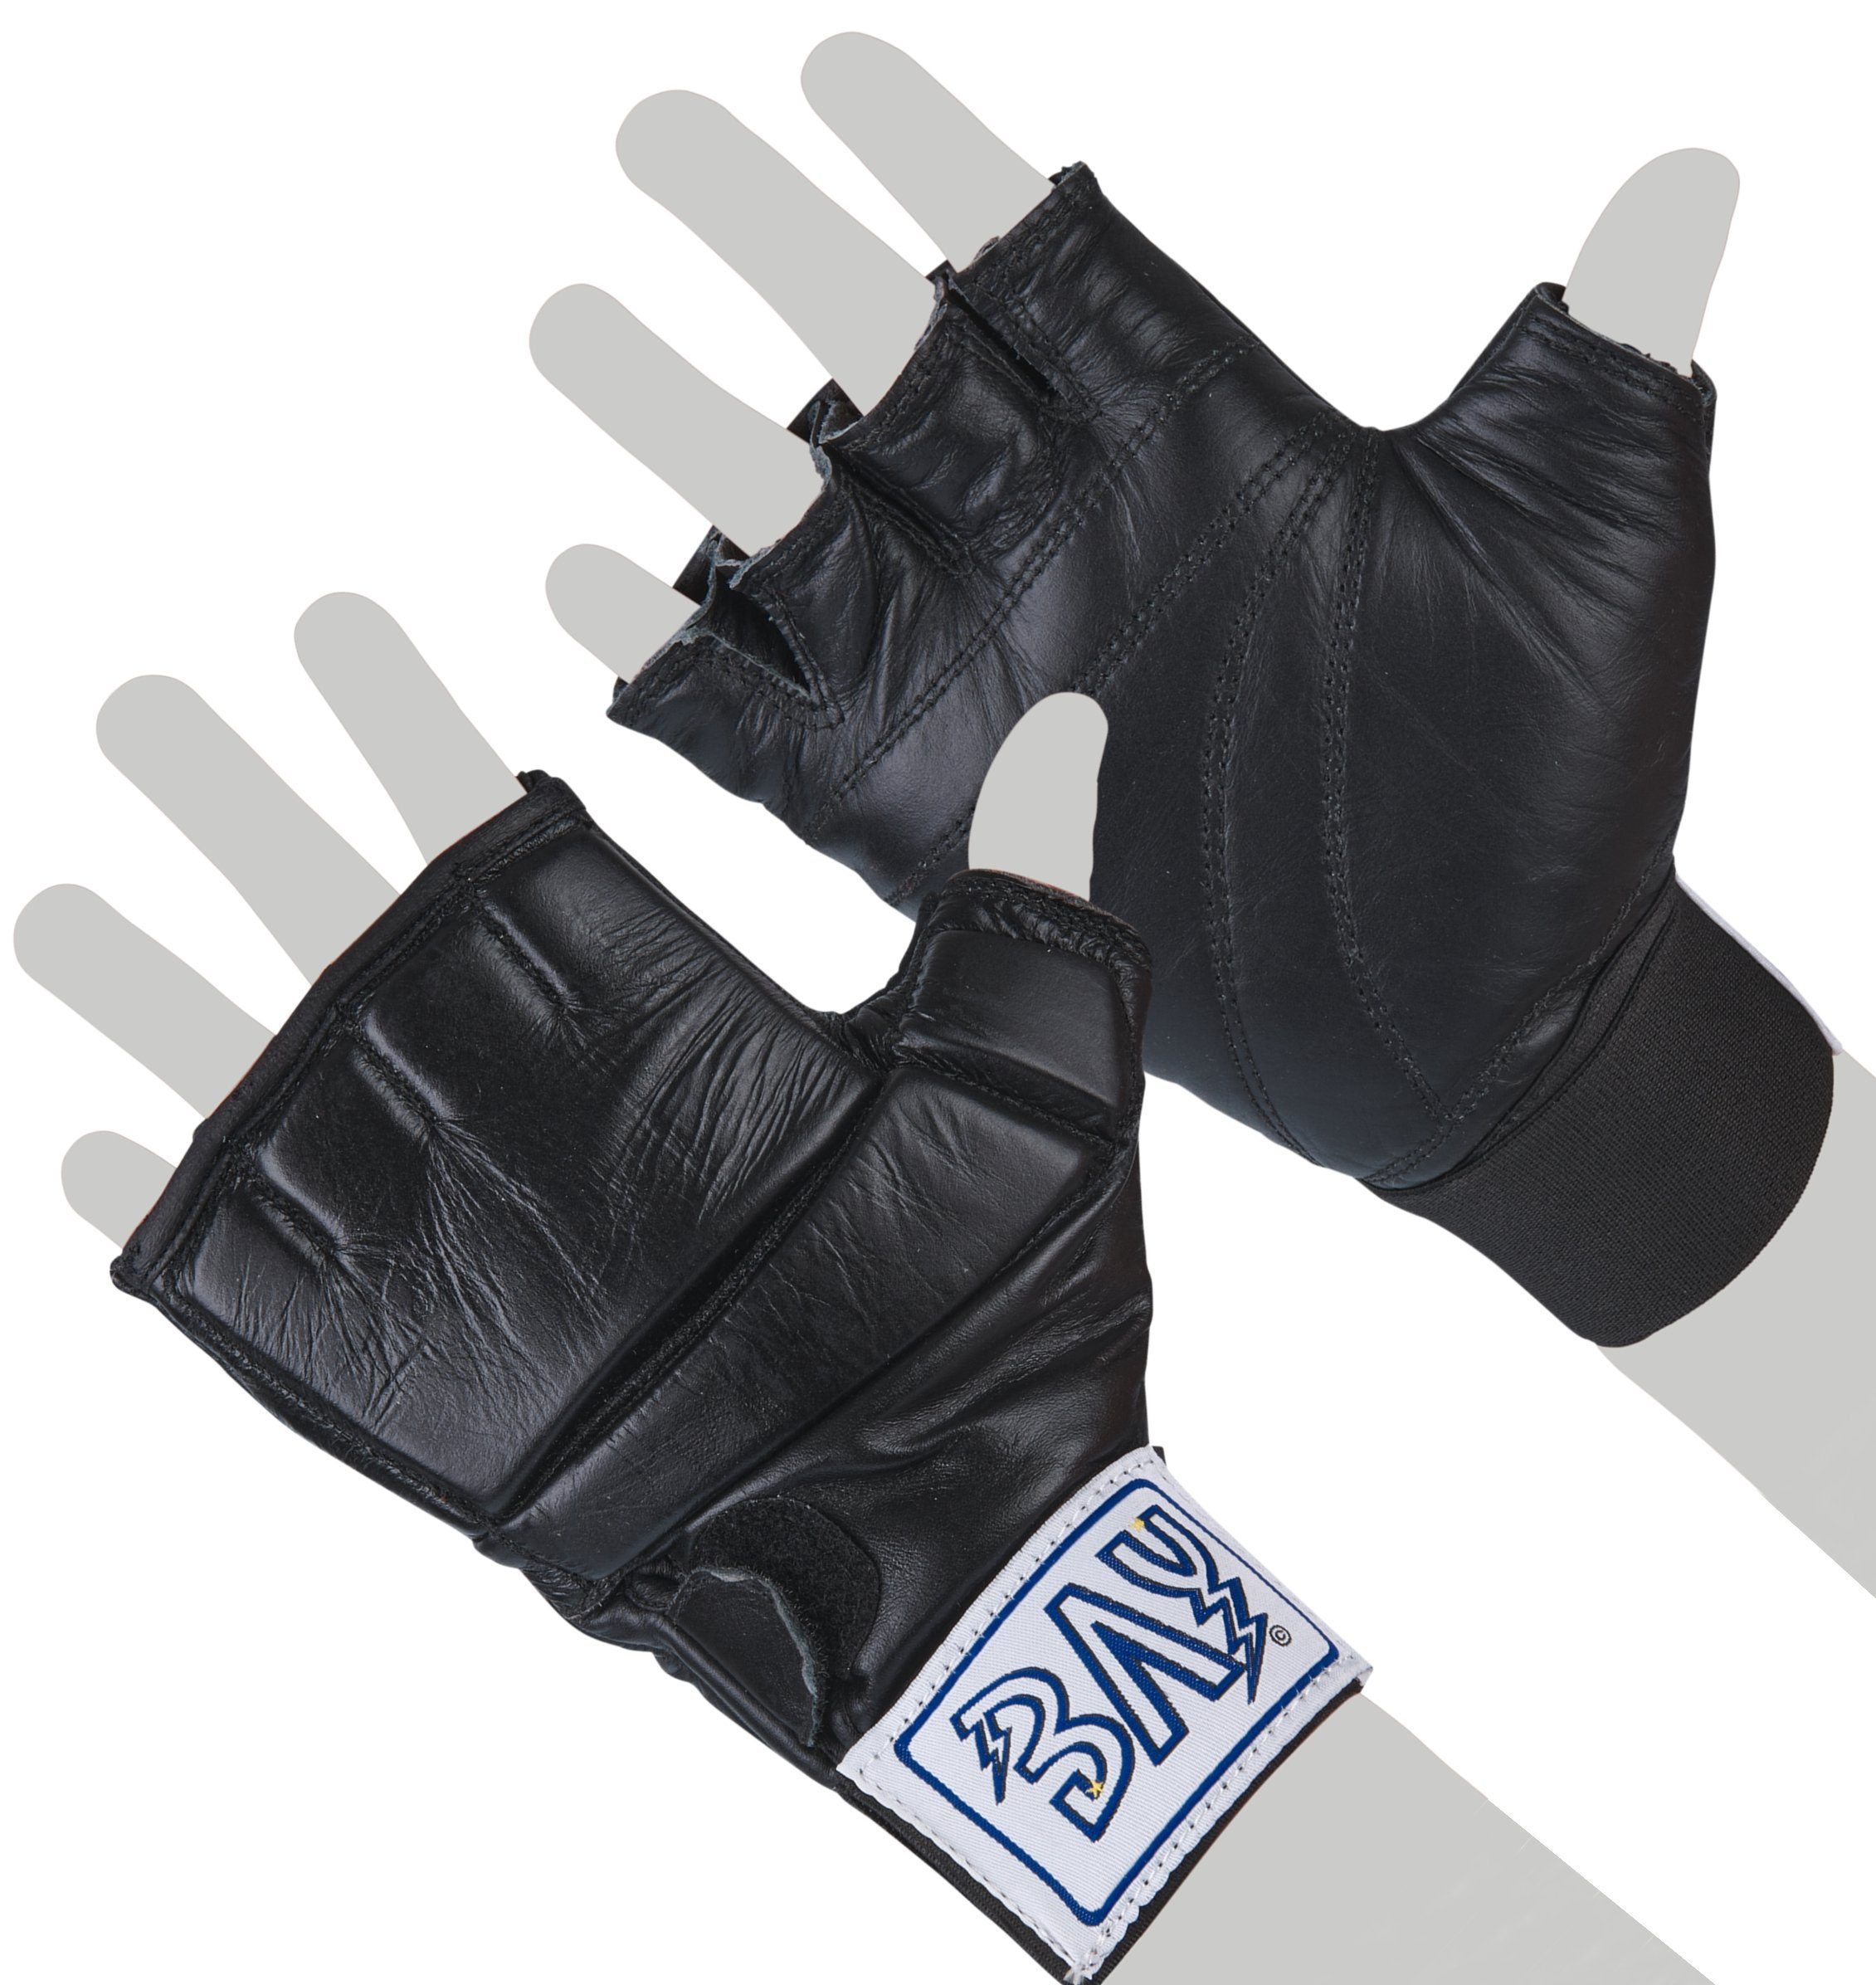 XL Boxsack Polsterung Sandsack - Sandsackhandschuhe Pad Handschut, S Leder Boxhandschuhe BAY-Sports Gel Gel